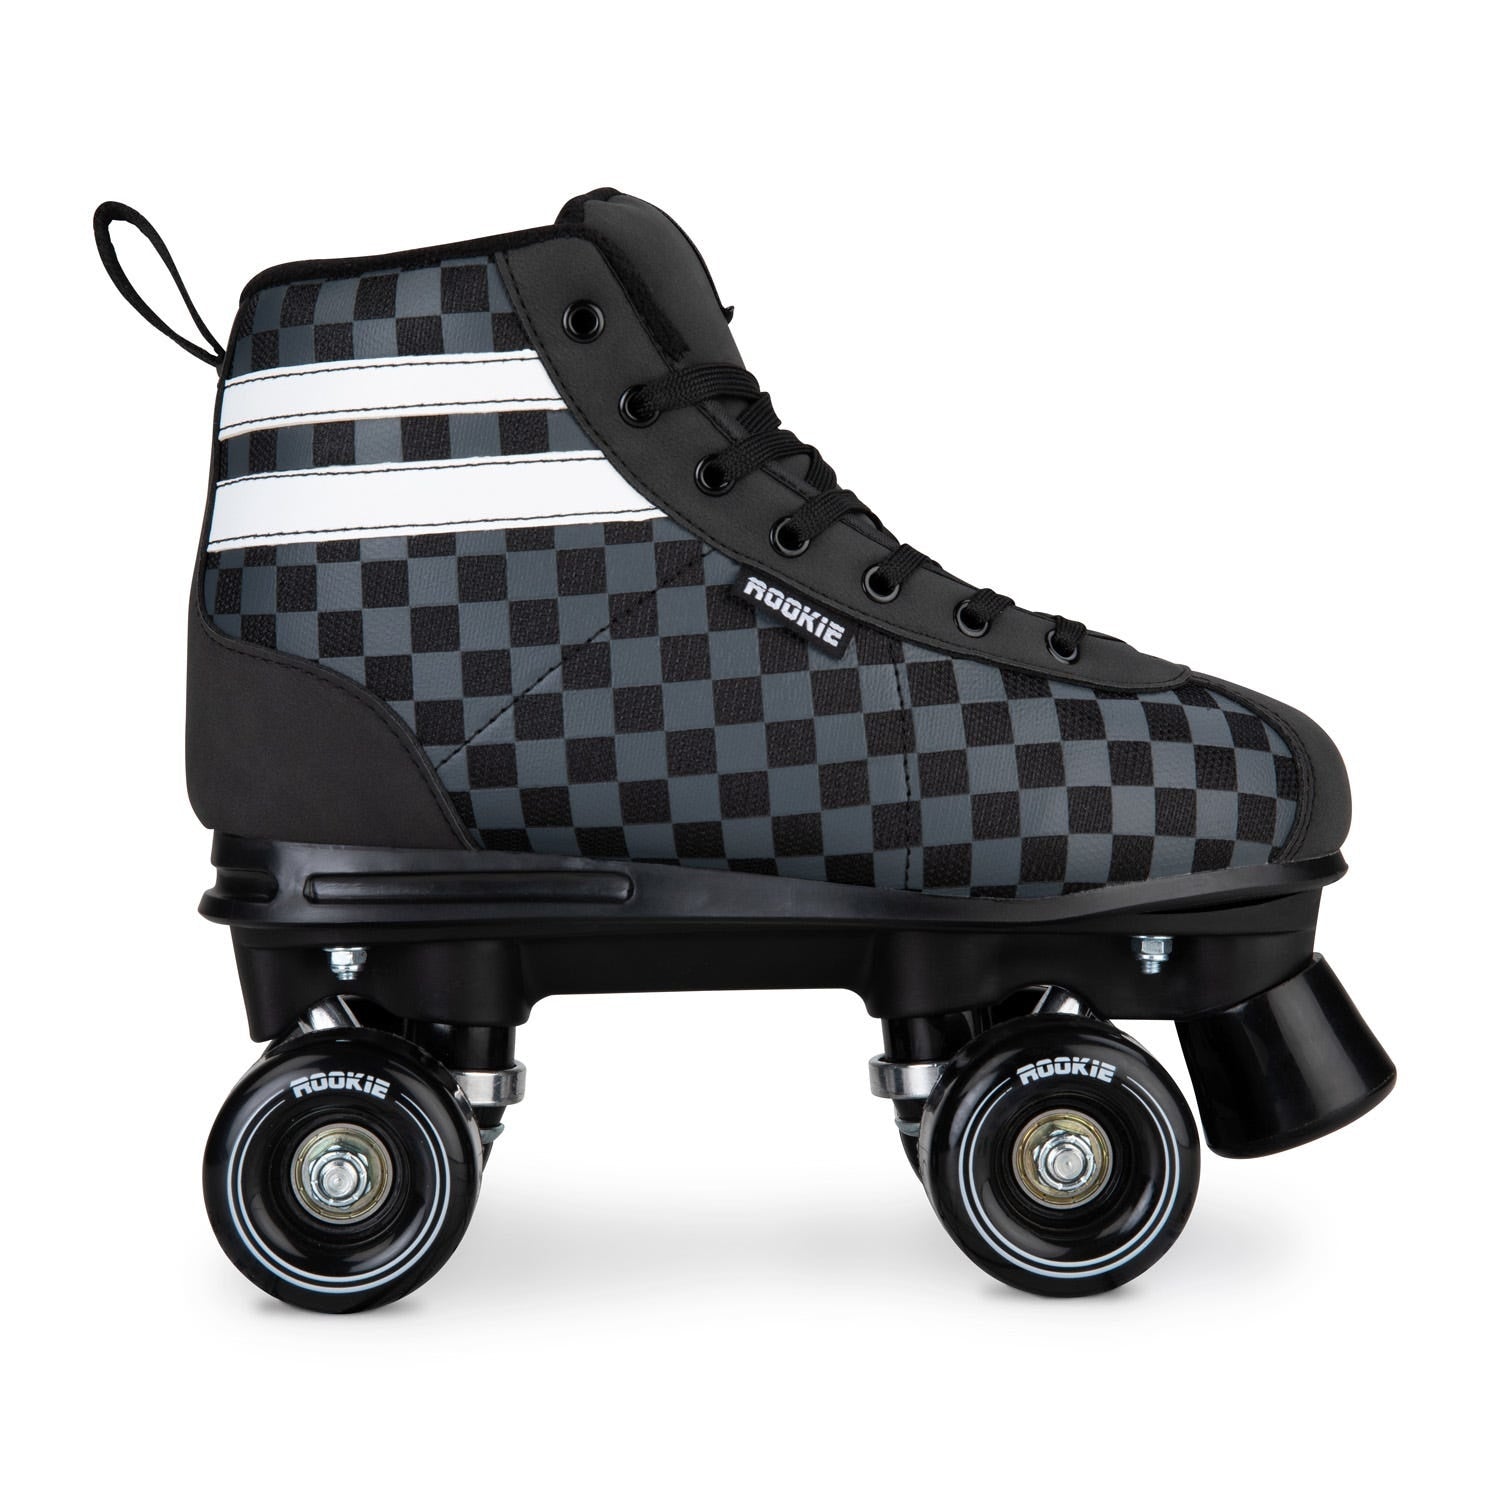 Magic V2 Rollerskates - Checker